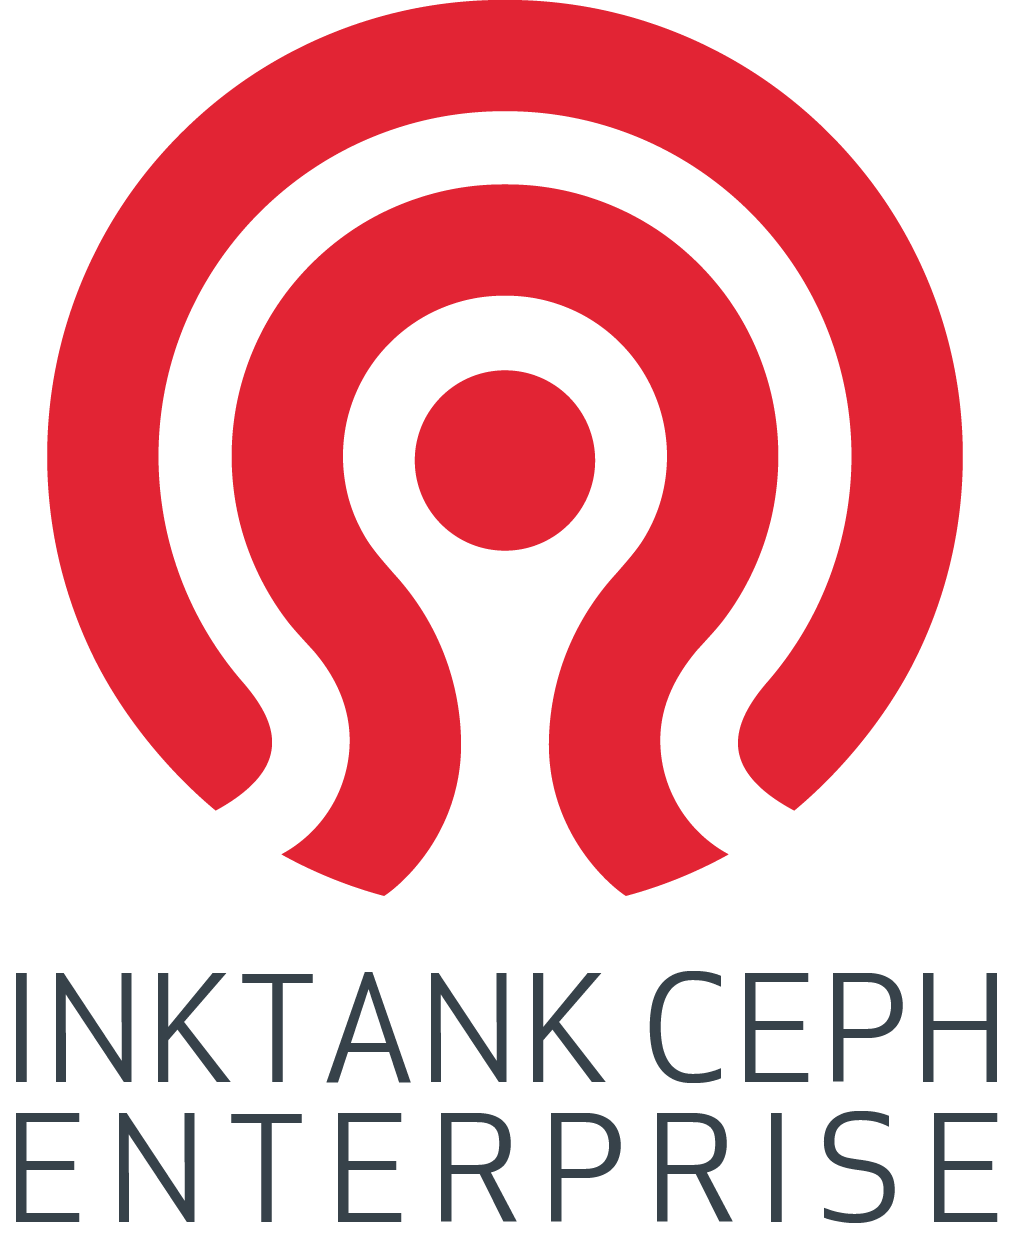 Inktank Ceph Enterprise logo